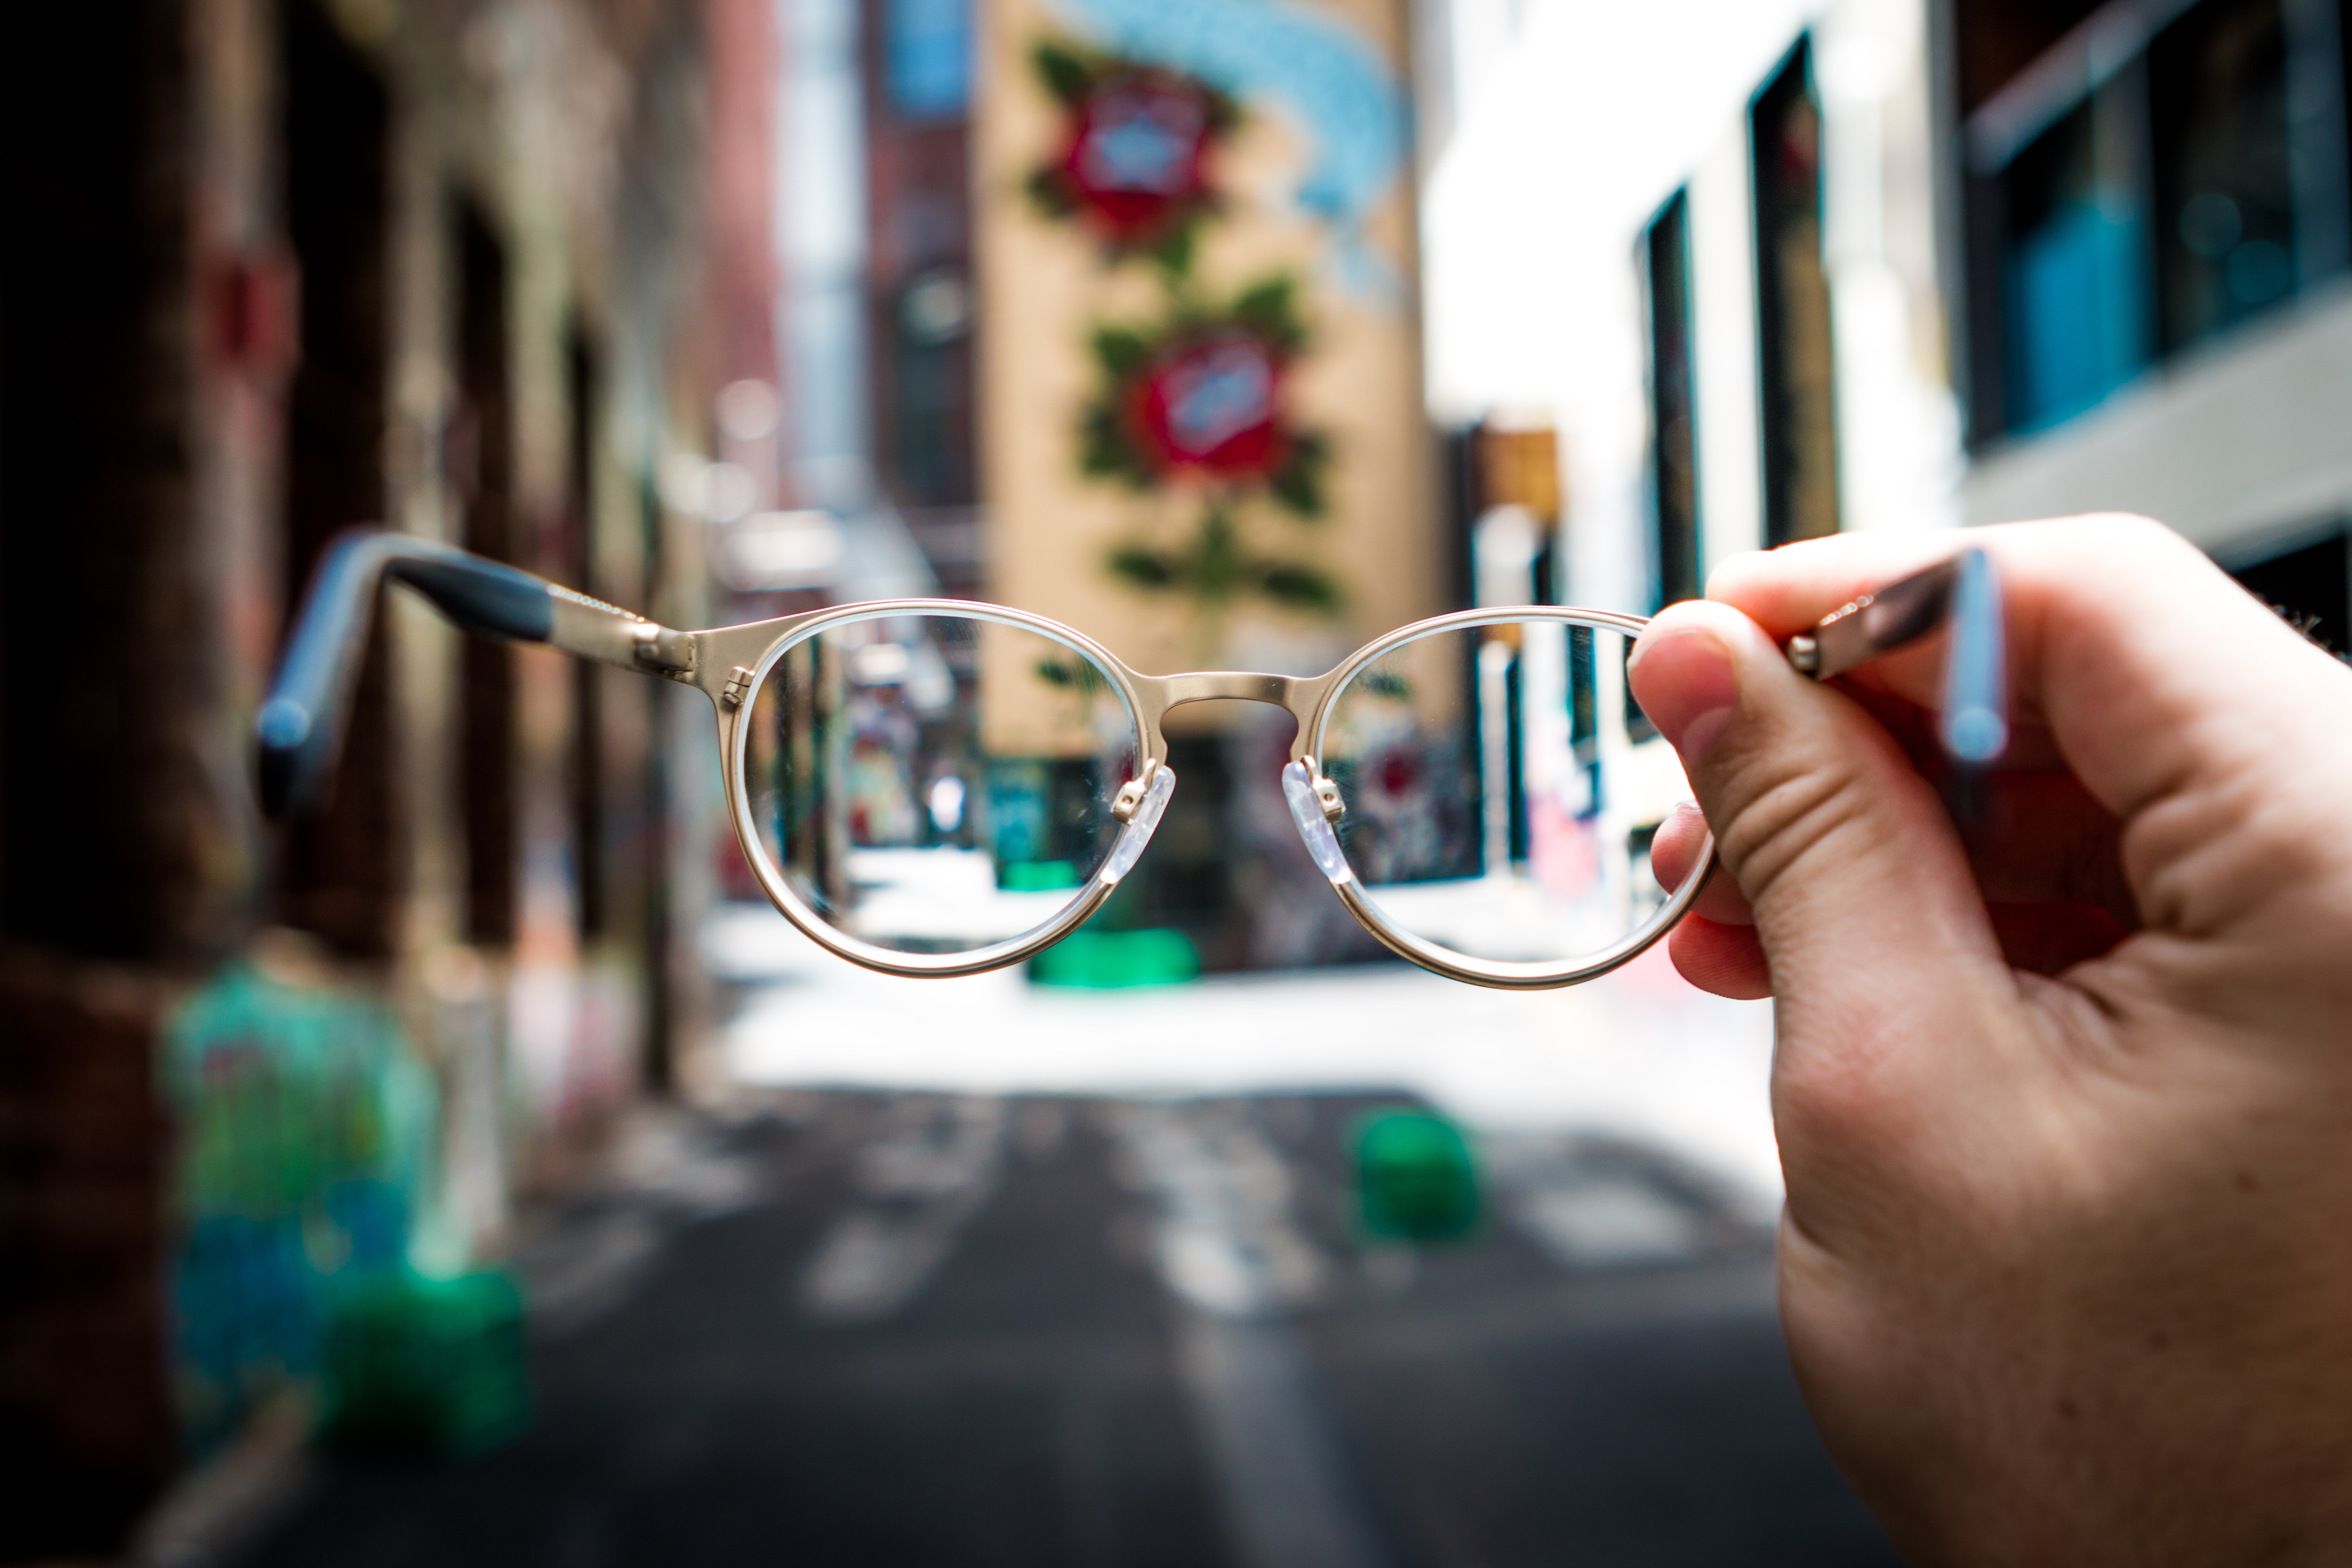 Man holding pair of glasses, surrounding scenery blurry; image by Josh Cala...